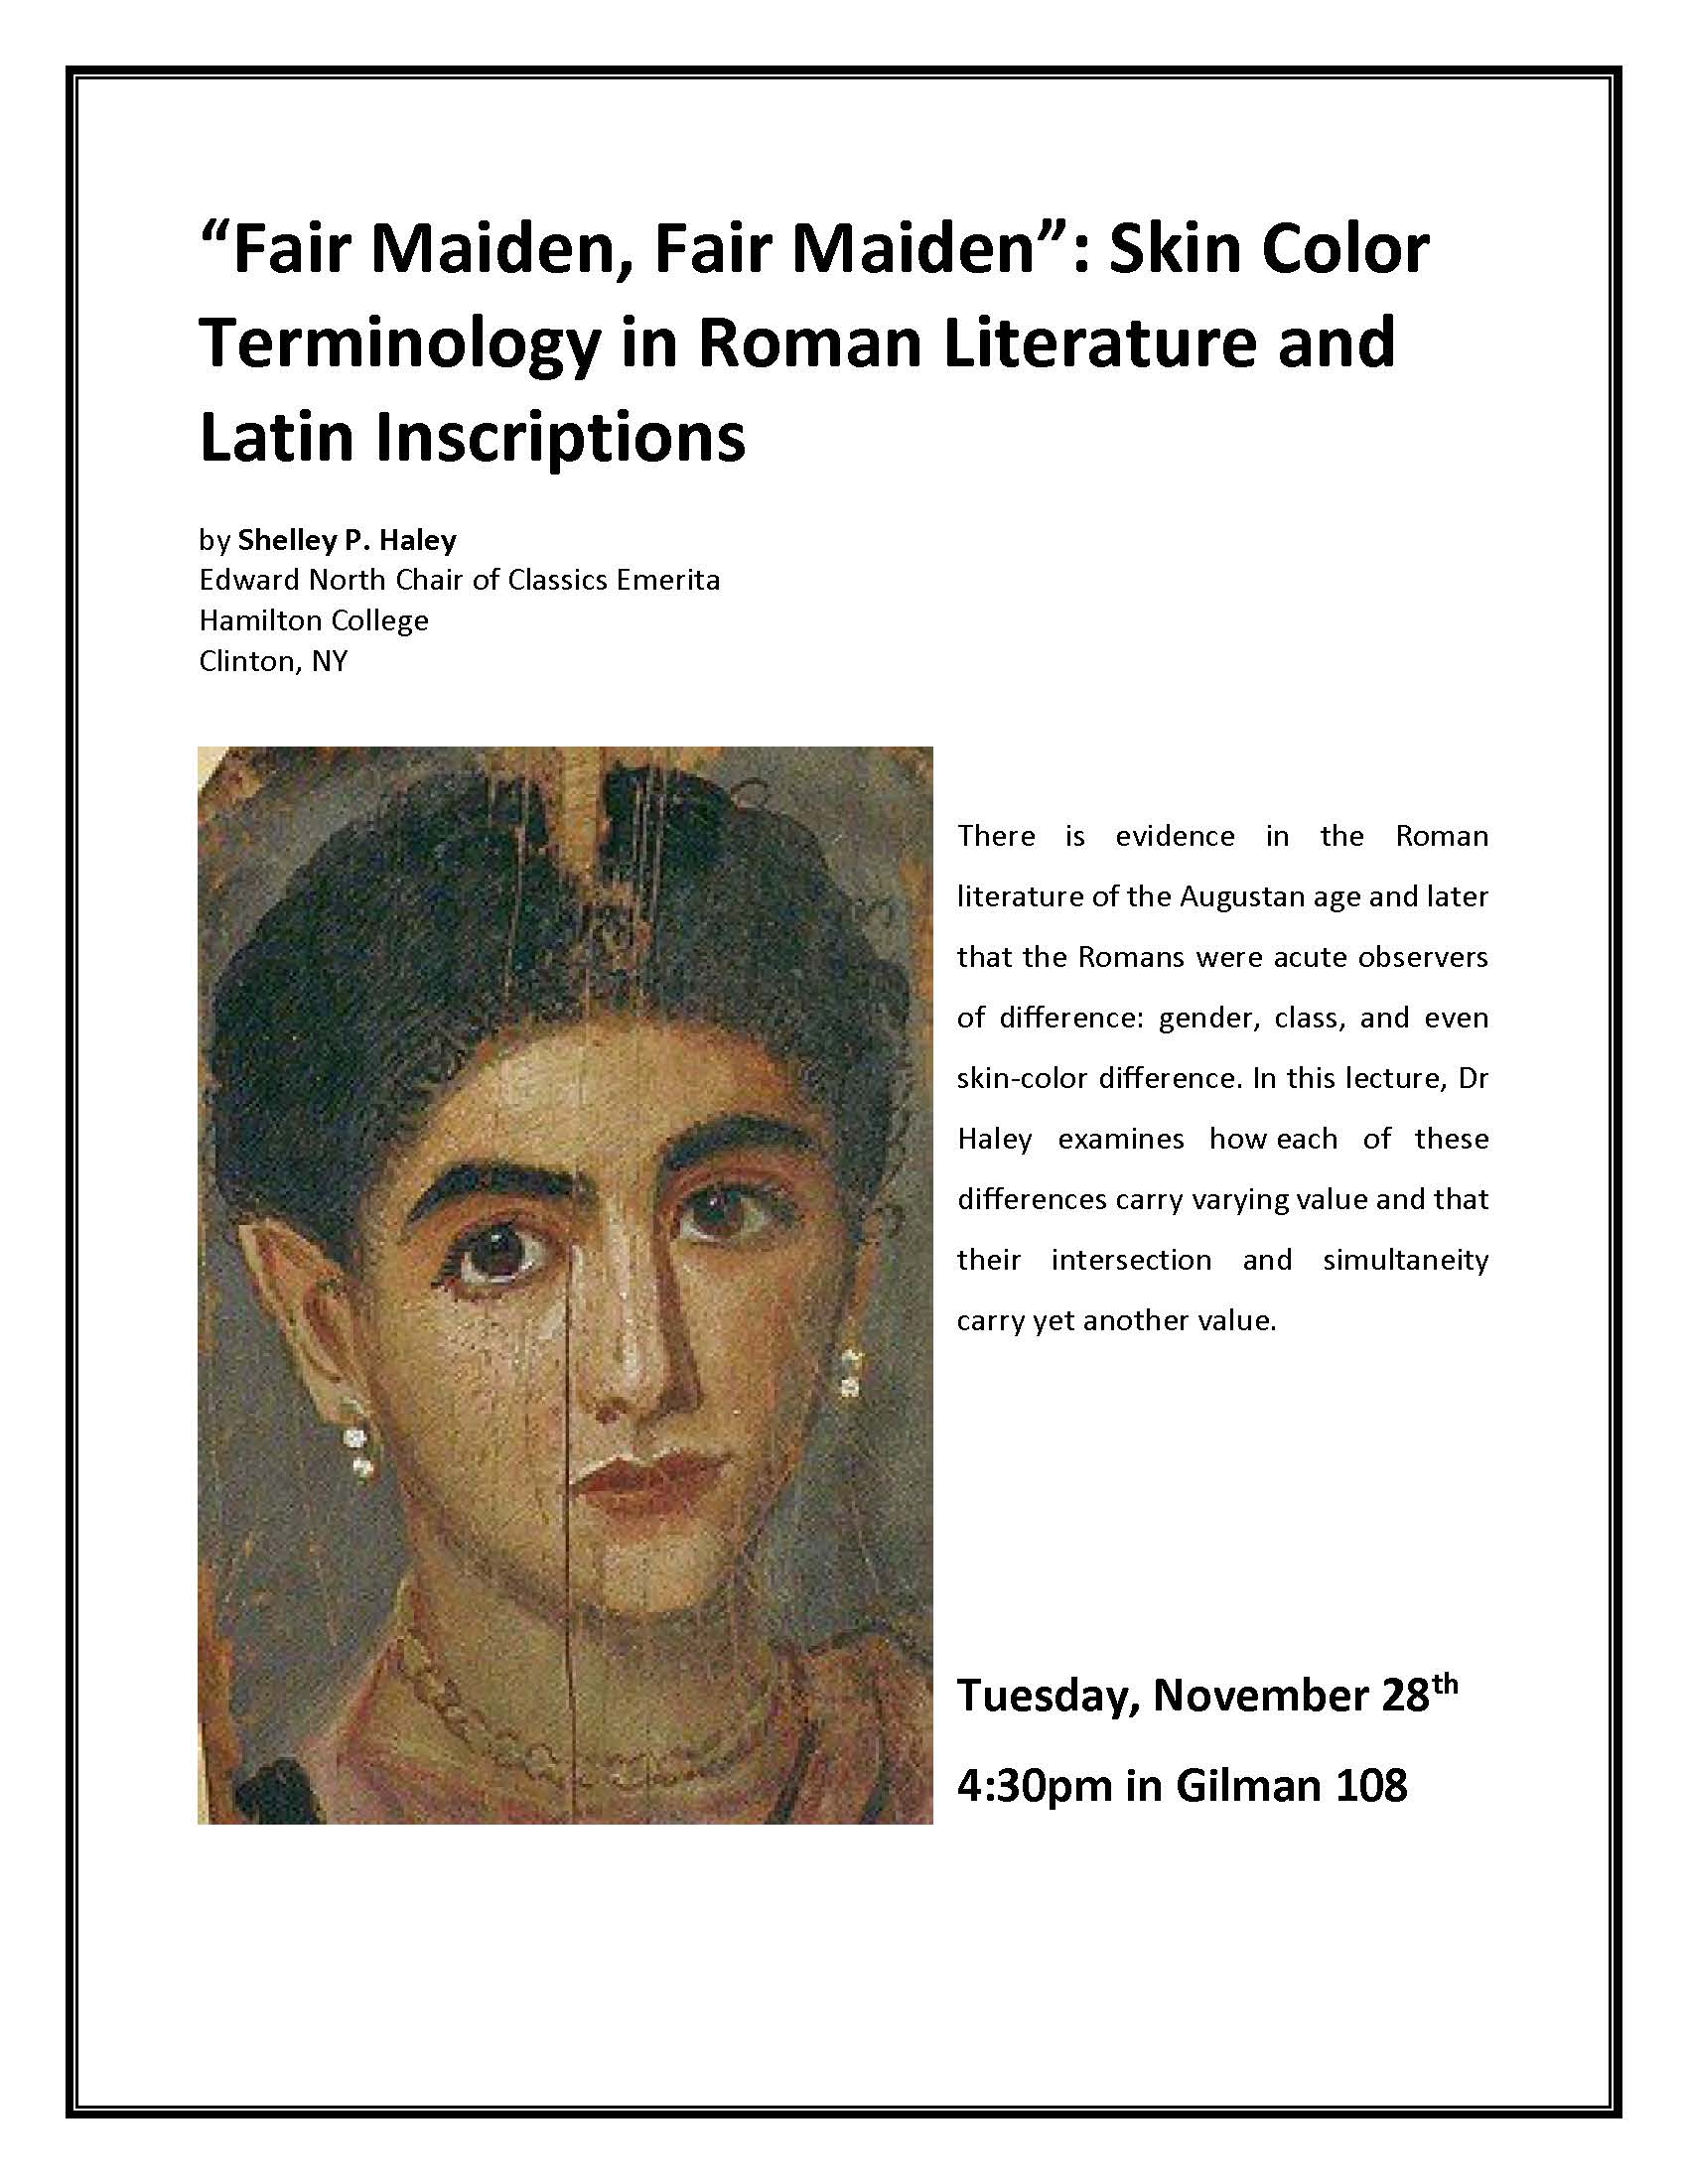 Fair Maiden, Fair Maiden”: Skin Color Terminology in Roman Literature and  Latin Inscriptions, Classics